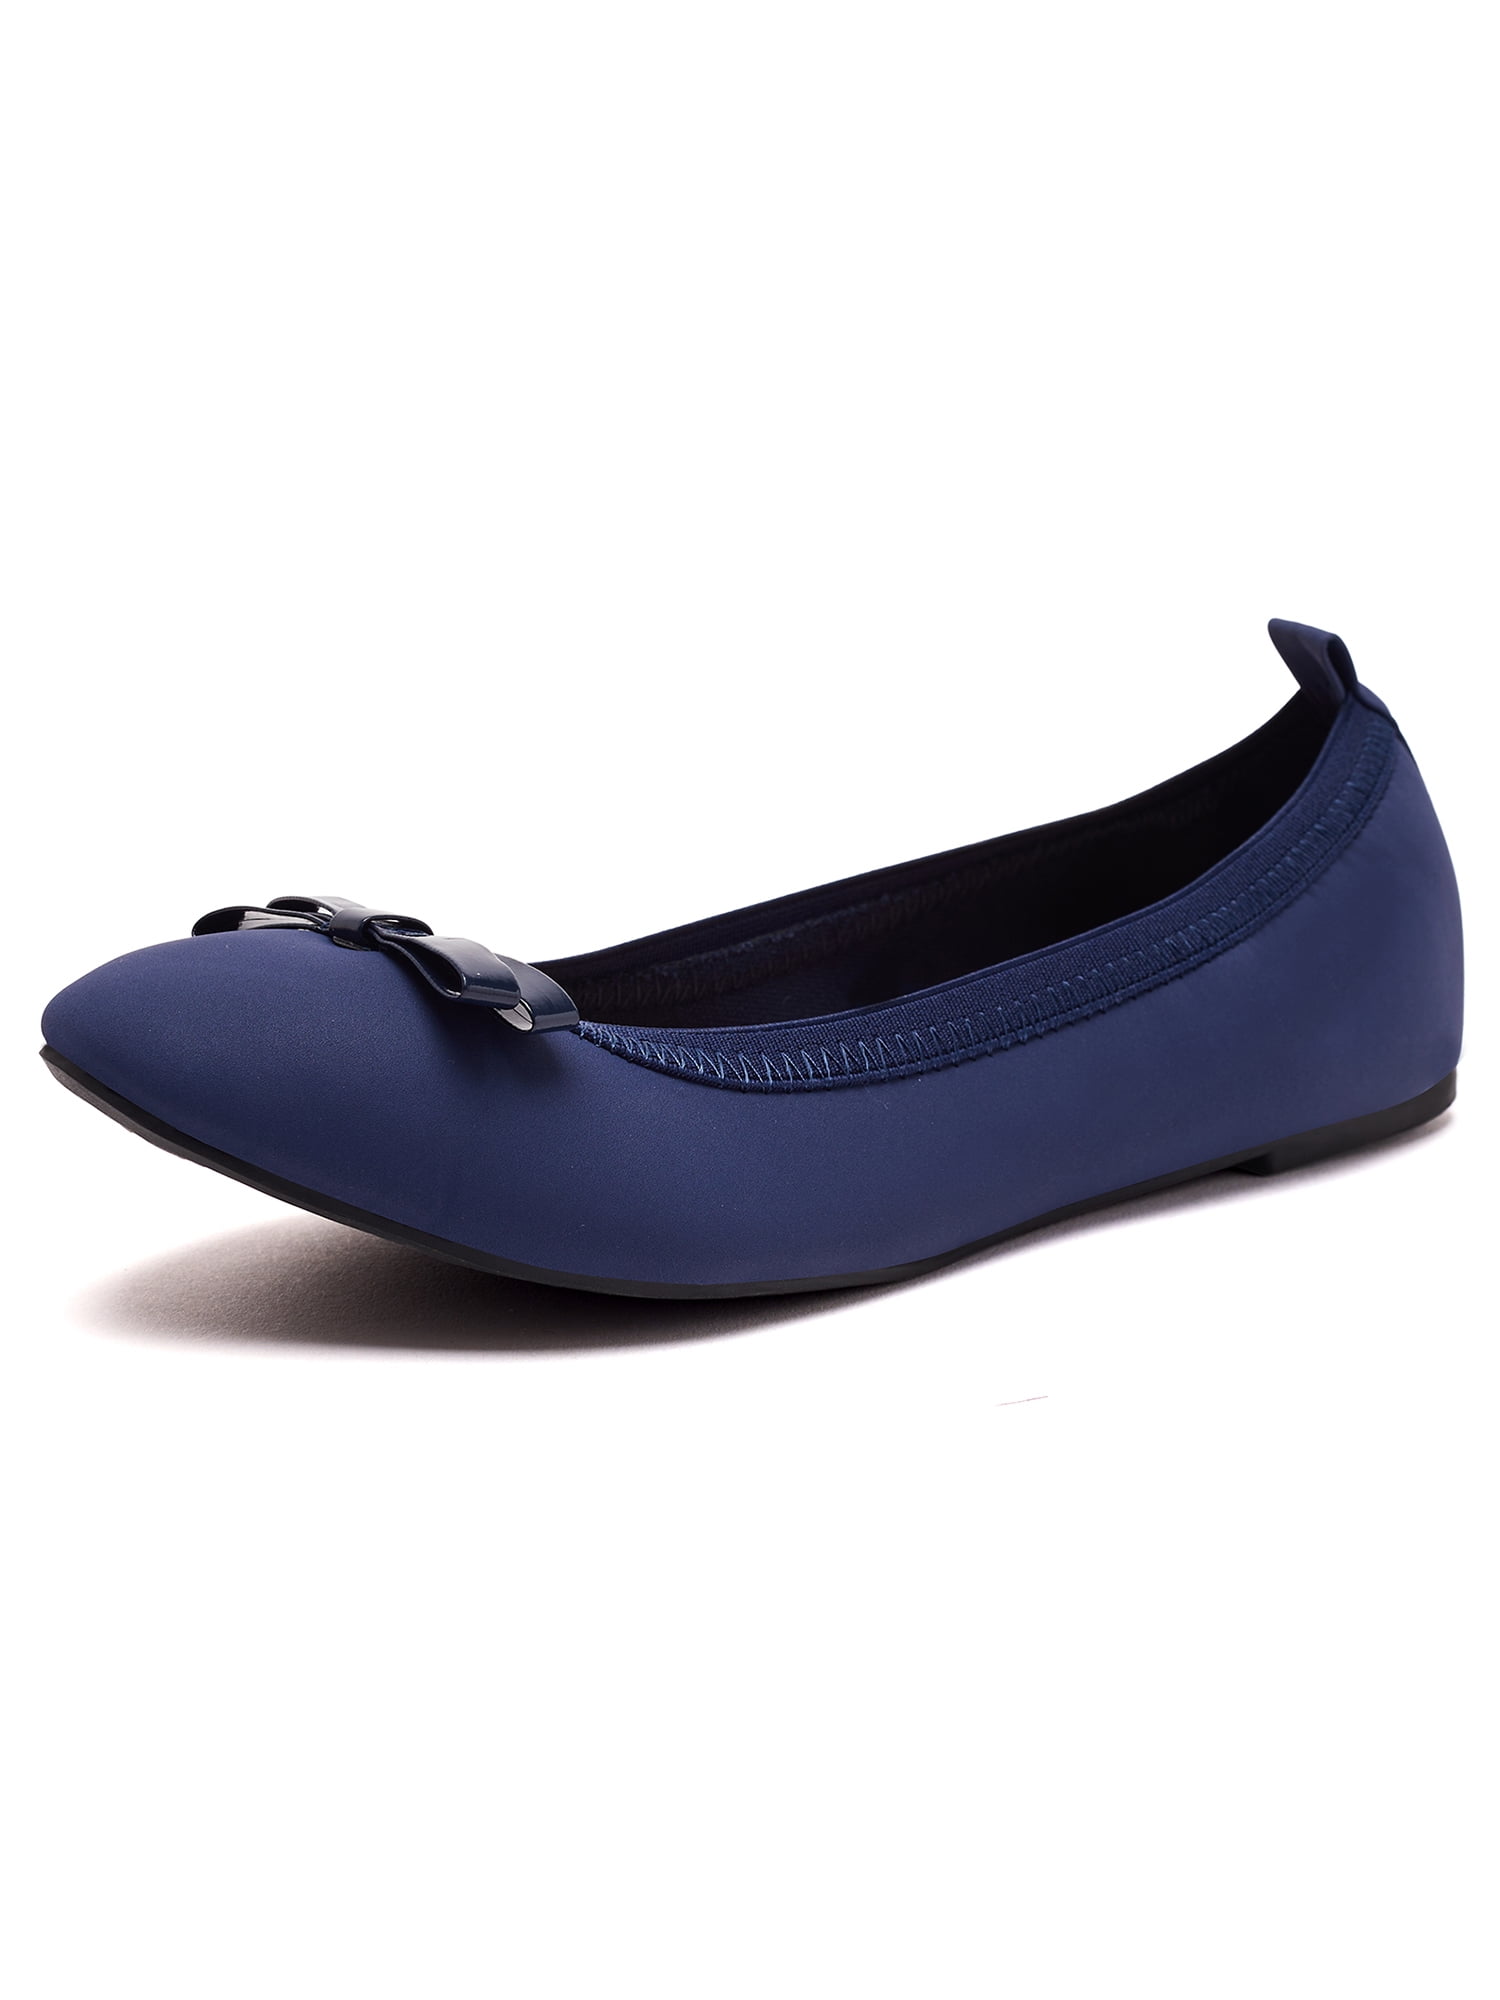 HOBIBEAR Womens Ballet Flats Shoes Comfort Slip On Walking Dress Shoes ...